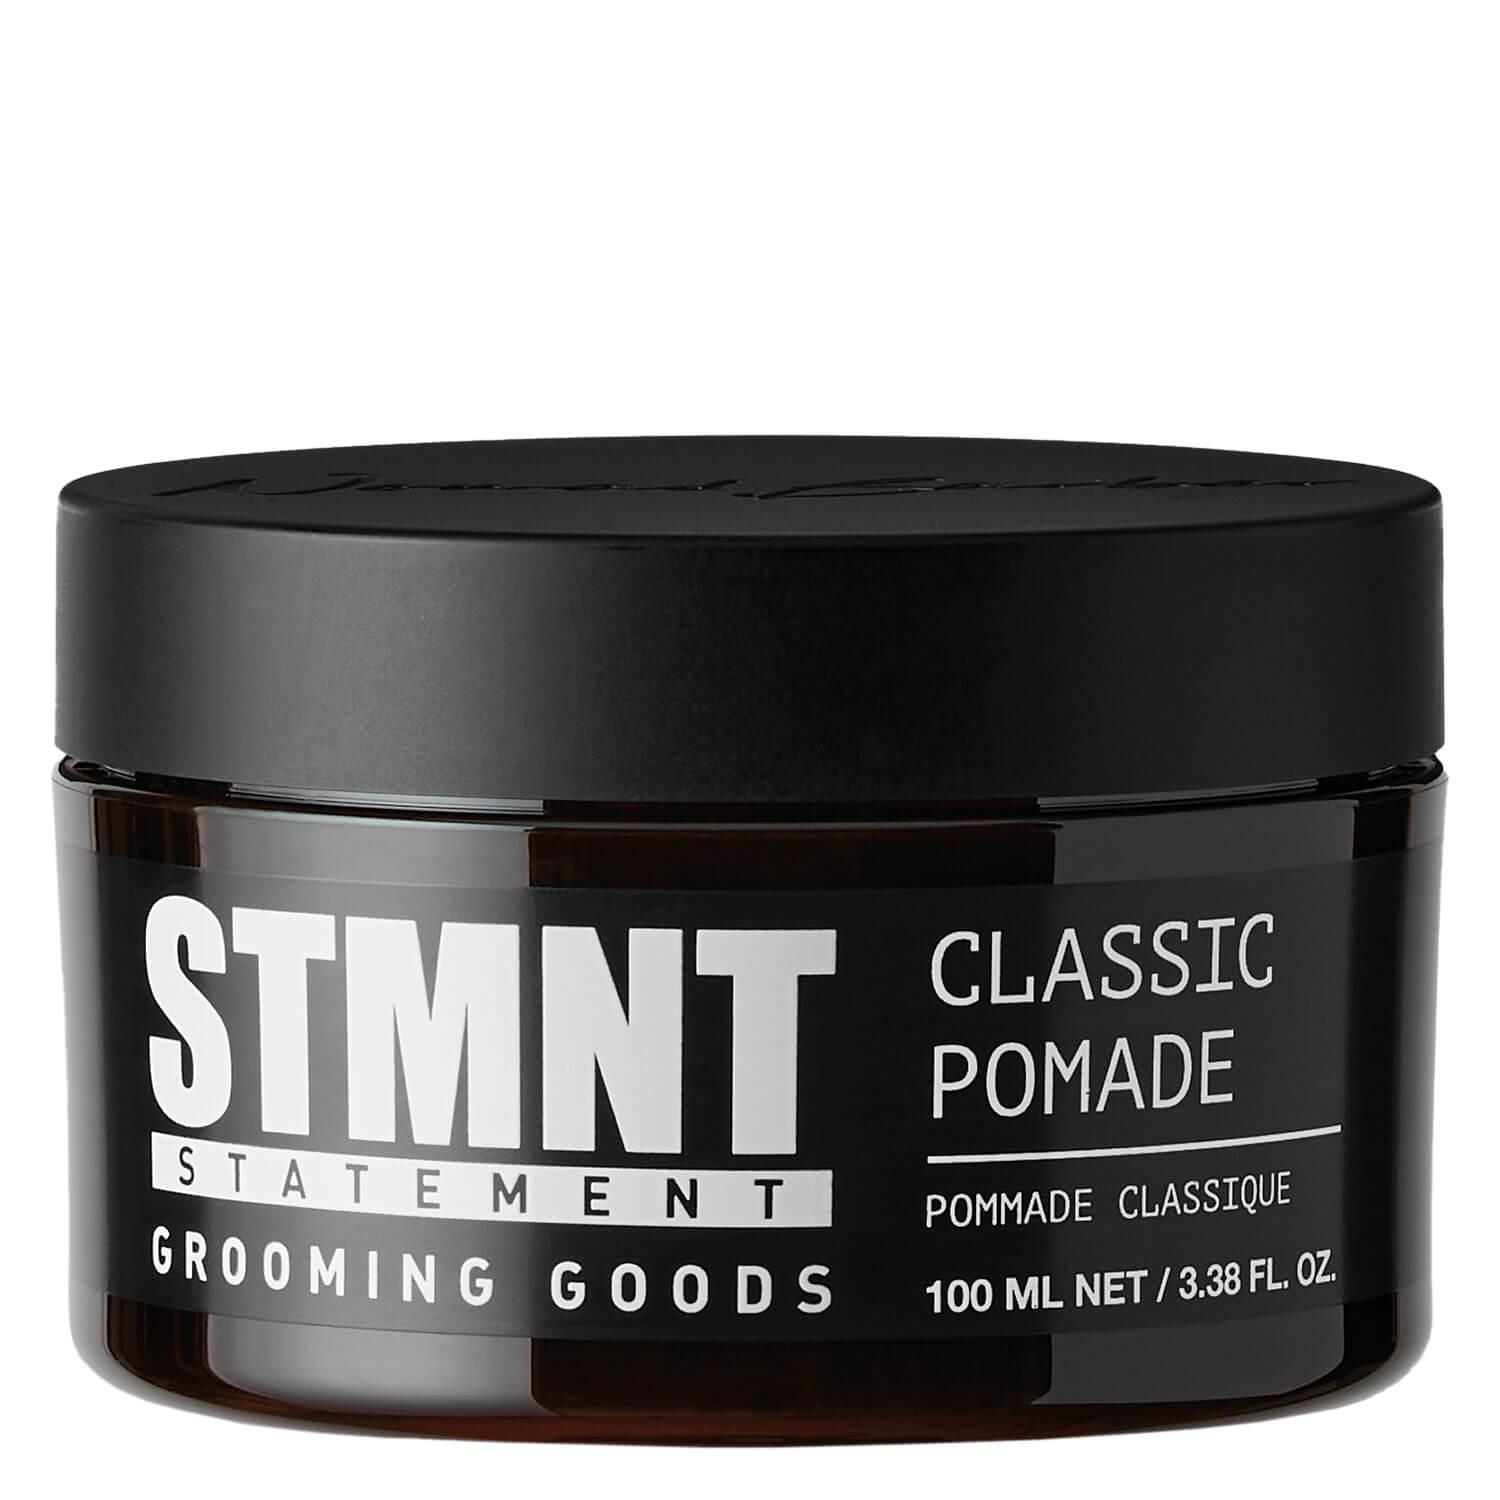 STMNT - Classic Pomade